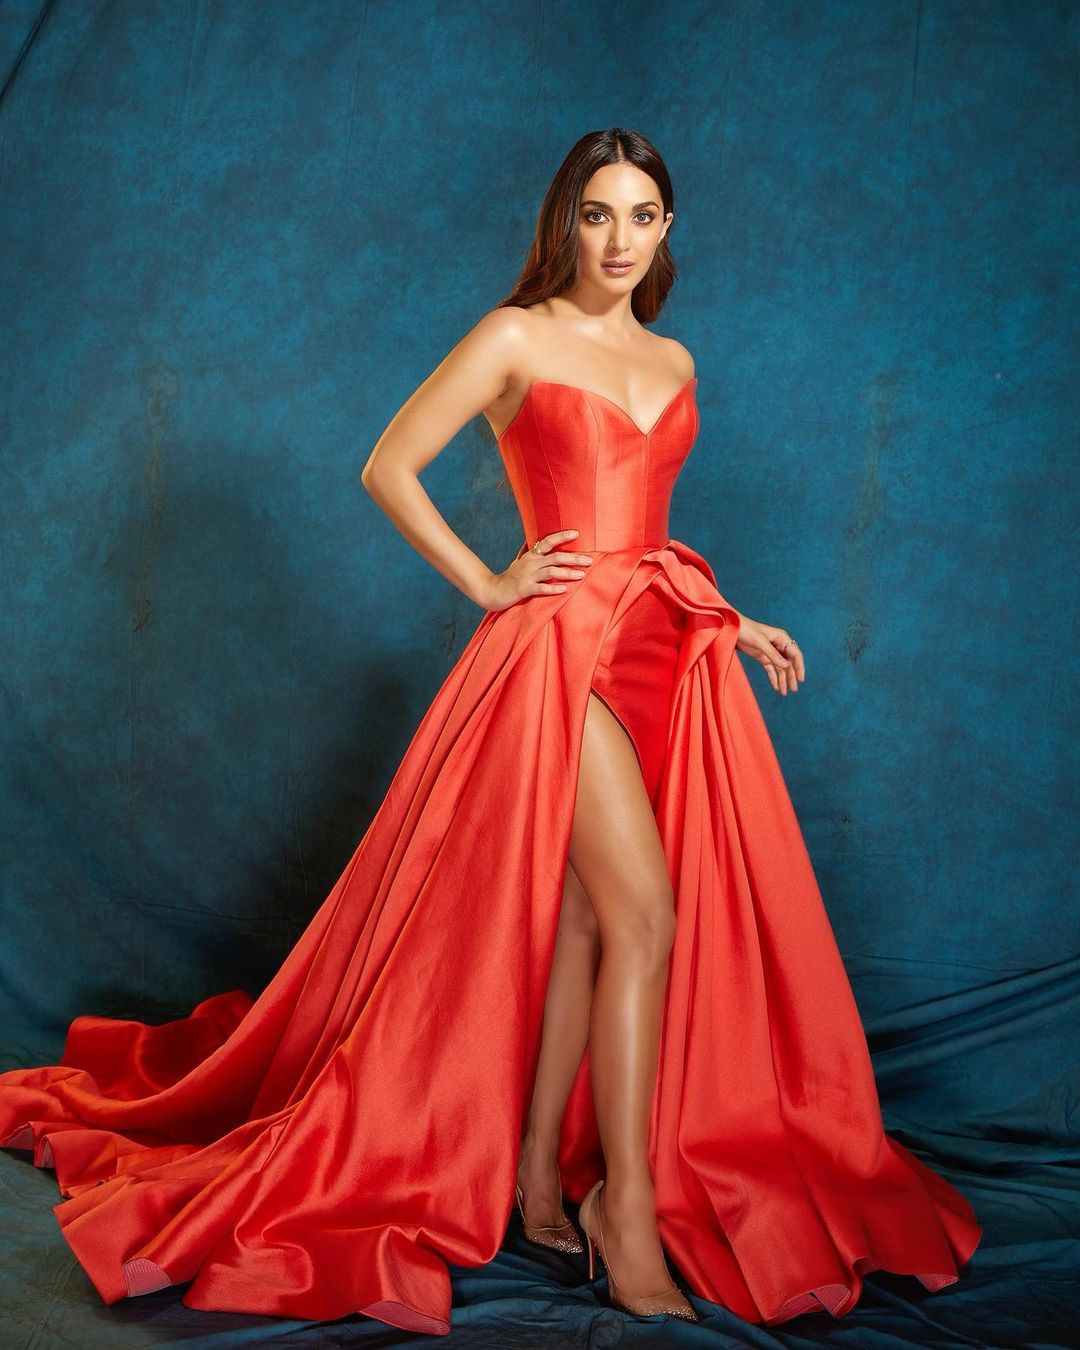 Kiara Advani looks like a million bucks in the off-shoulder red princess-style gown